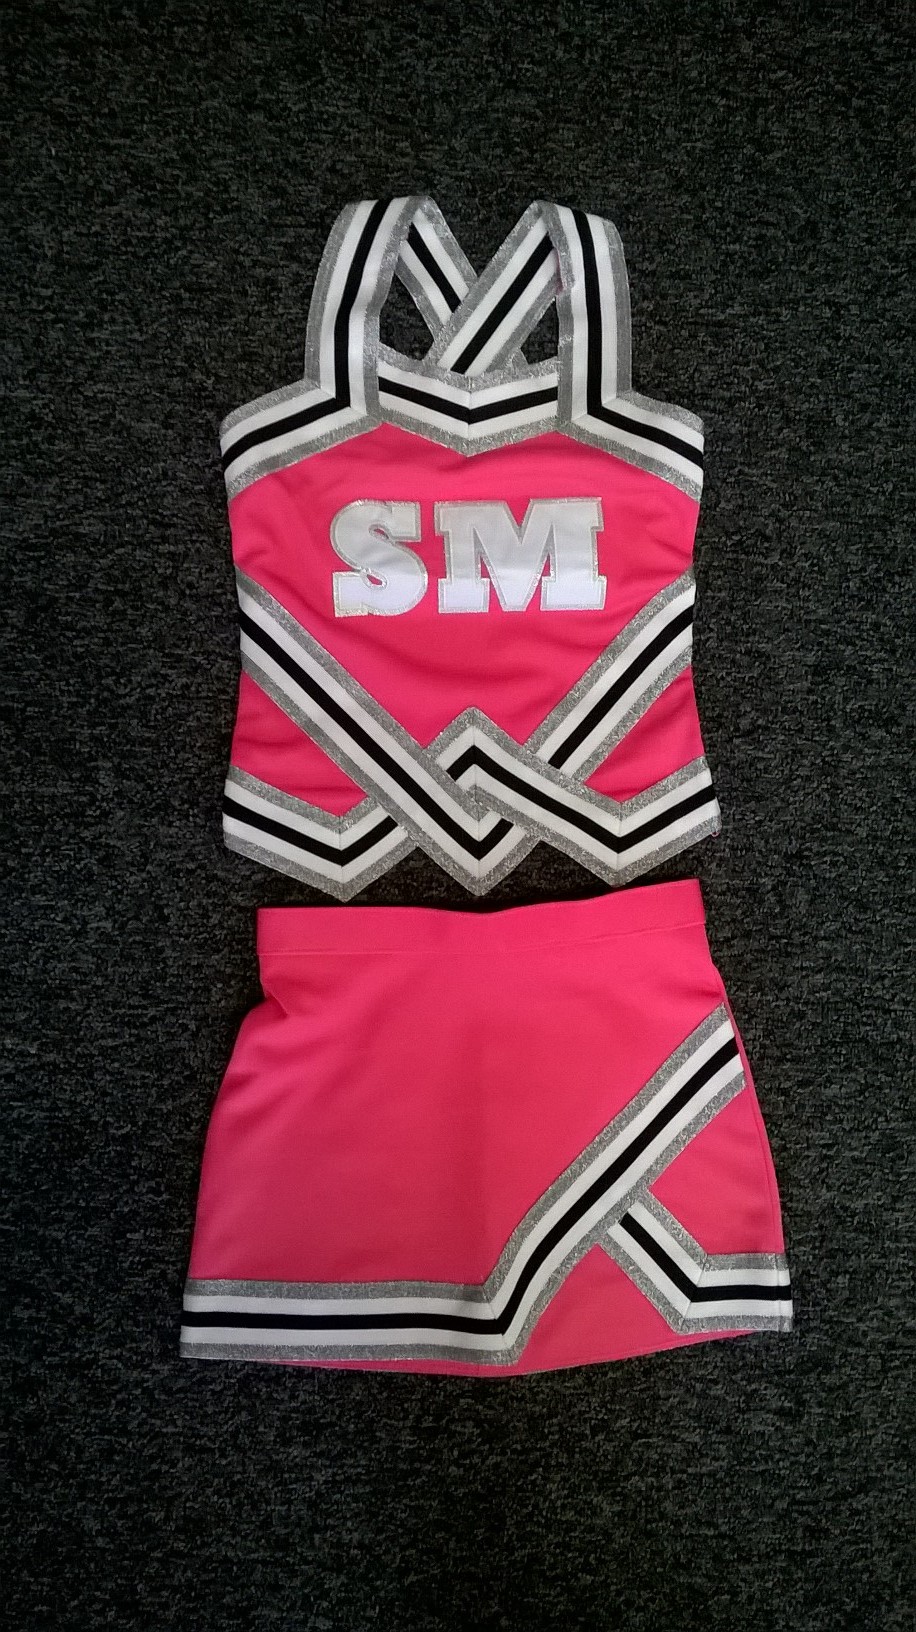 Designer Sleeveless Cheerleading Uniforms - Available with Cheer World